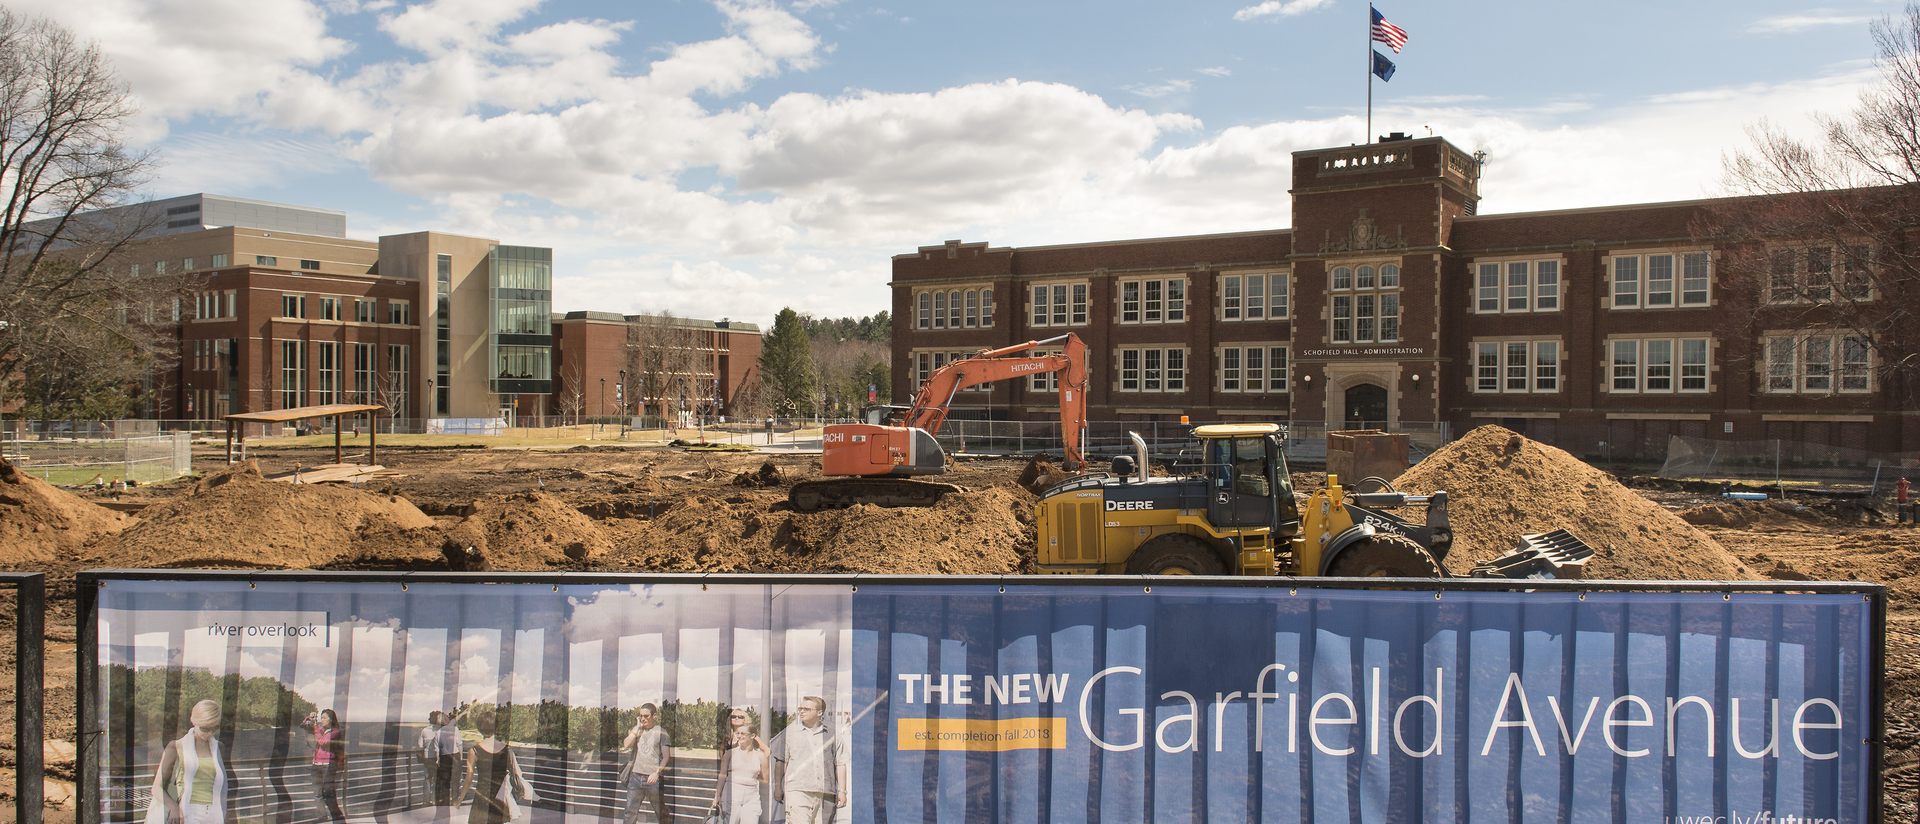 Garfield Avenue redevelopment project